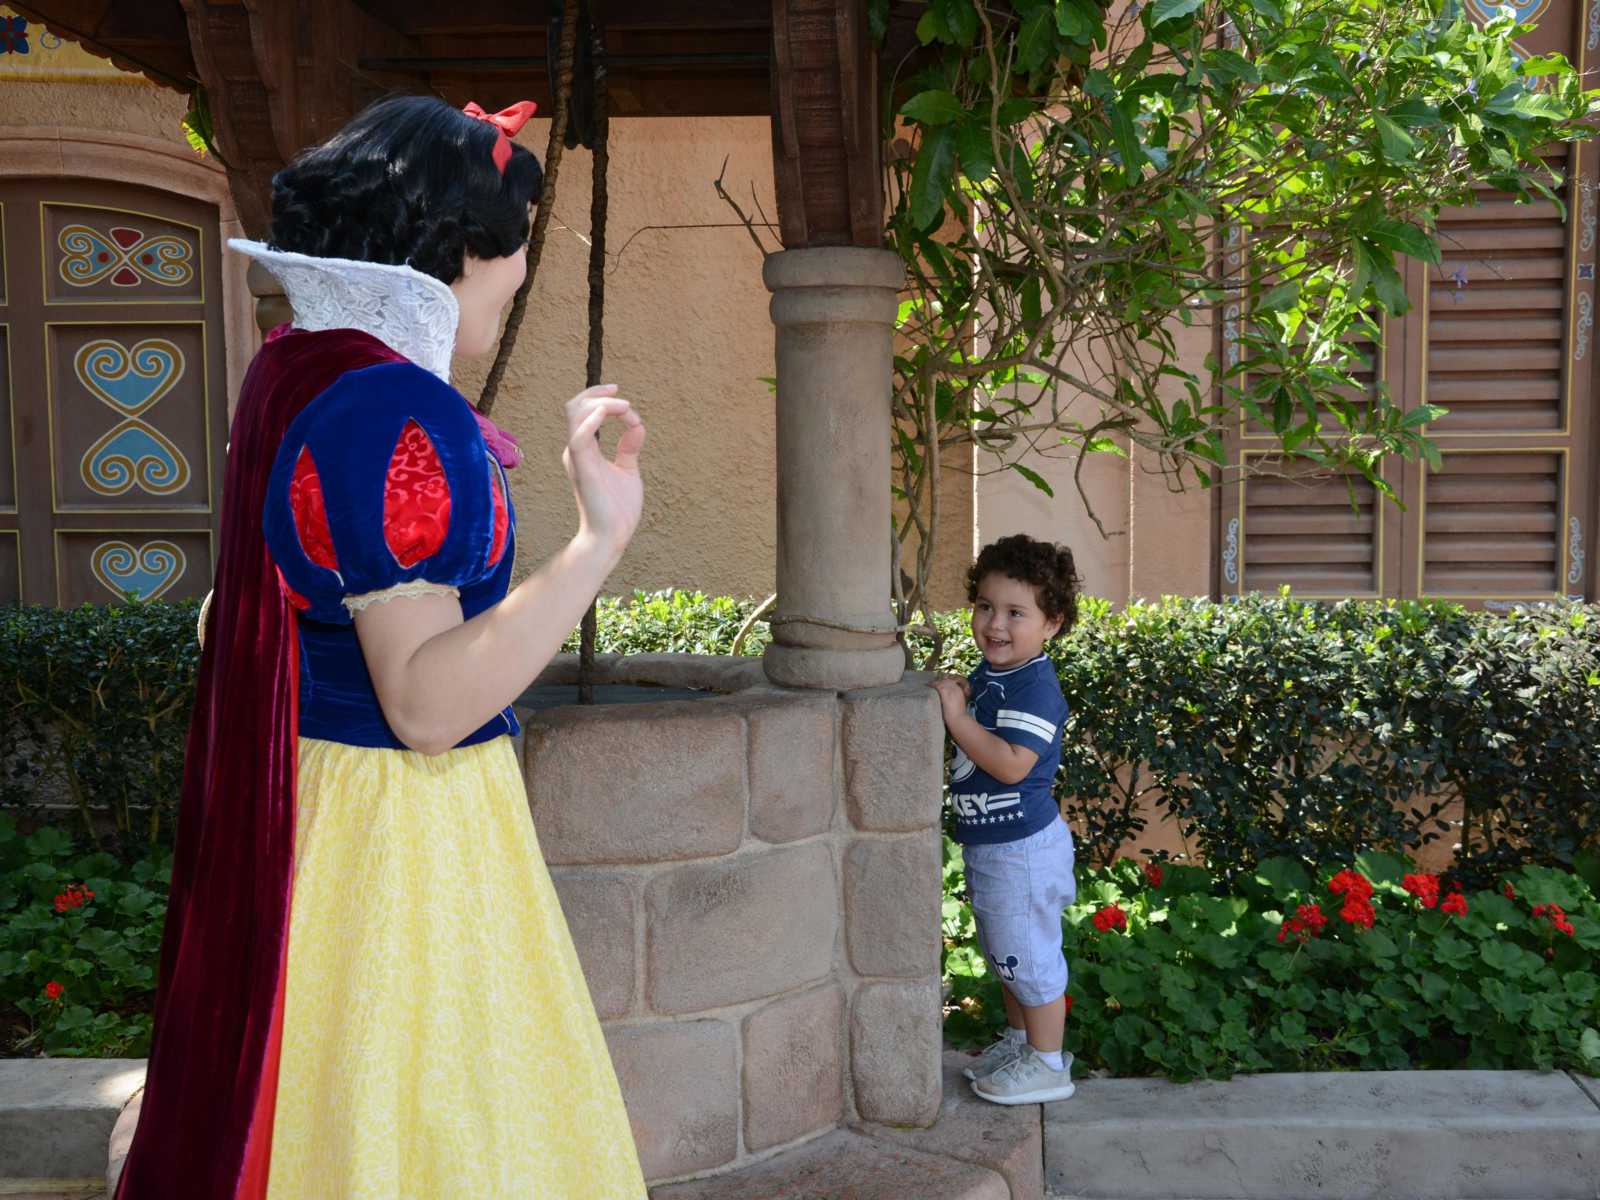 Toddler stands behind pillar peeking out at Snow White at Disney World